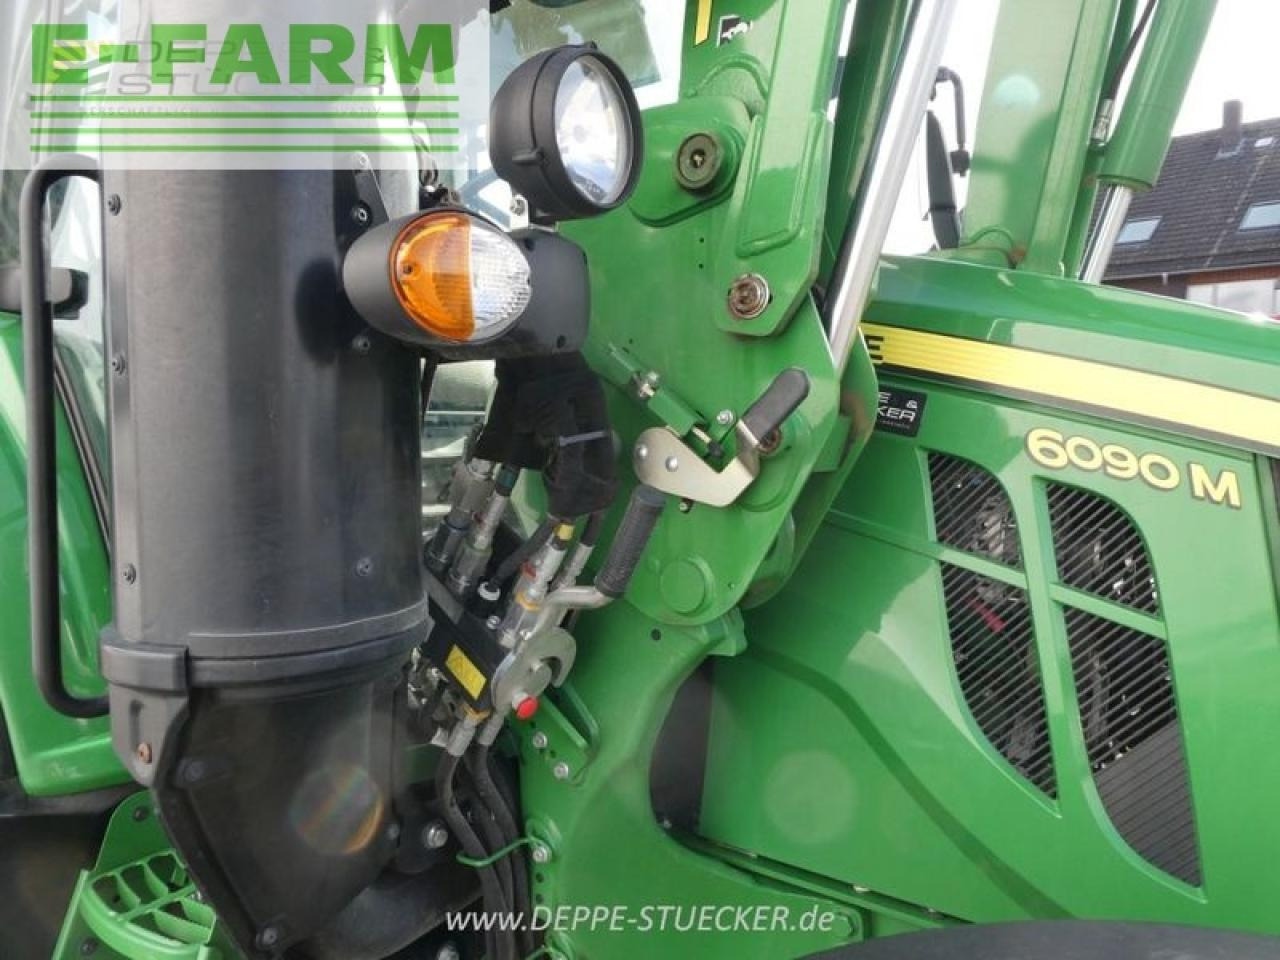 Farm tractor John Deere 6090m: picture 18